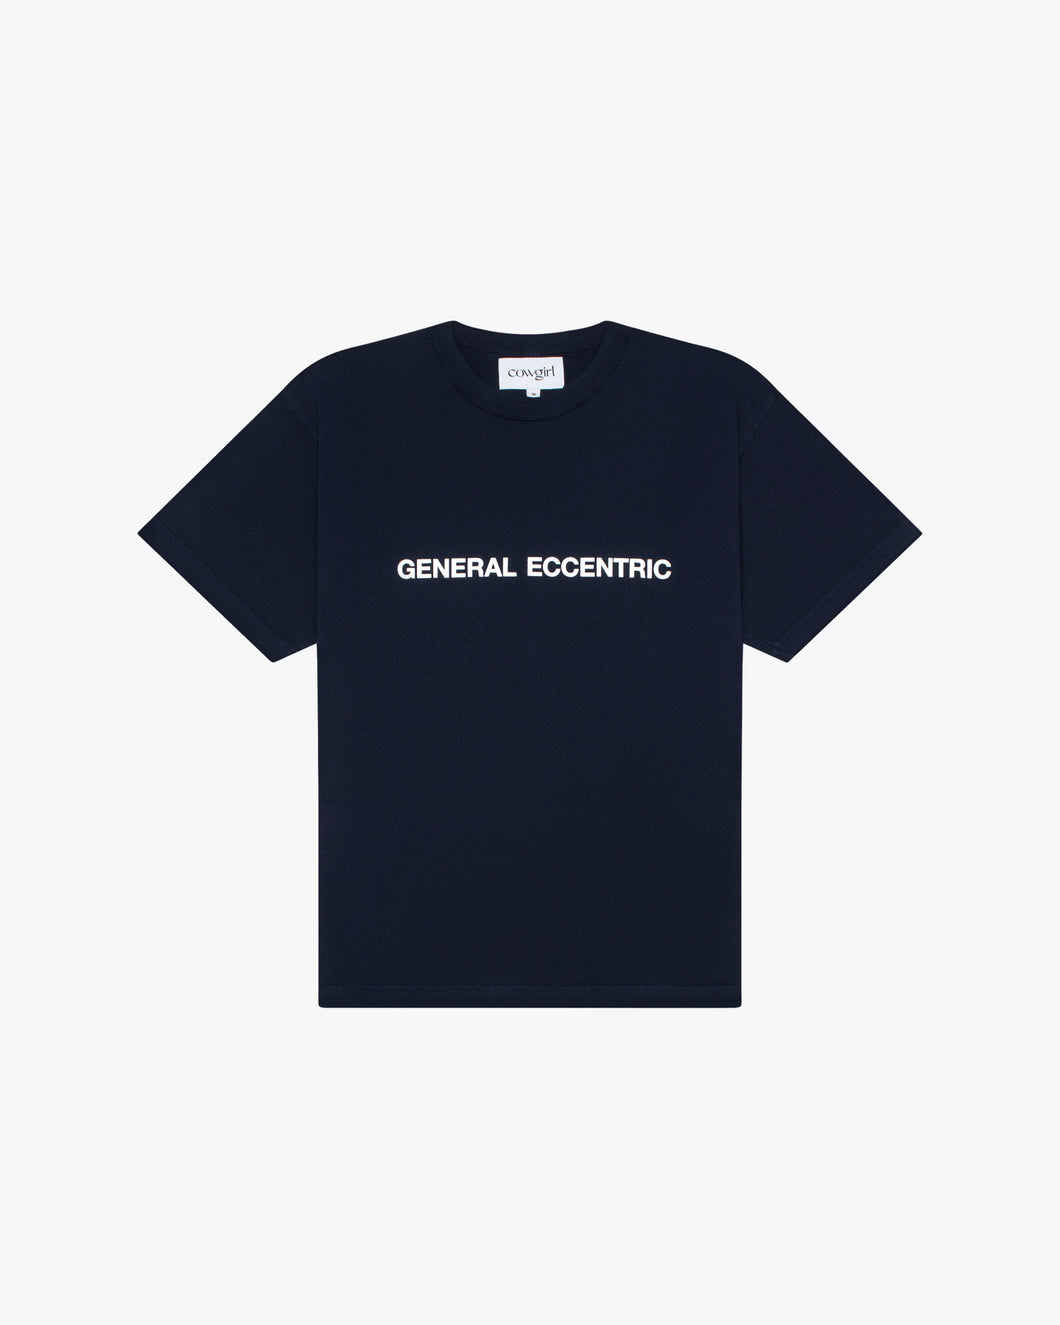 General Eccentric T Shirt (Navy, MEDIUM)